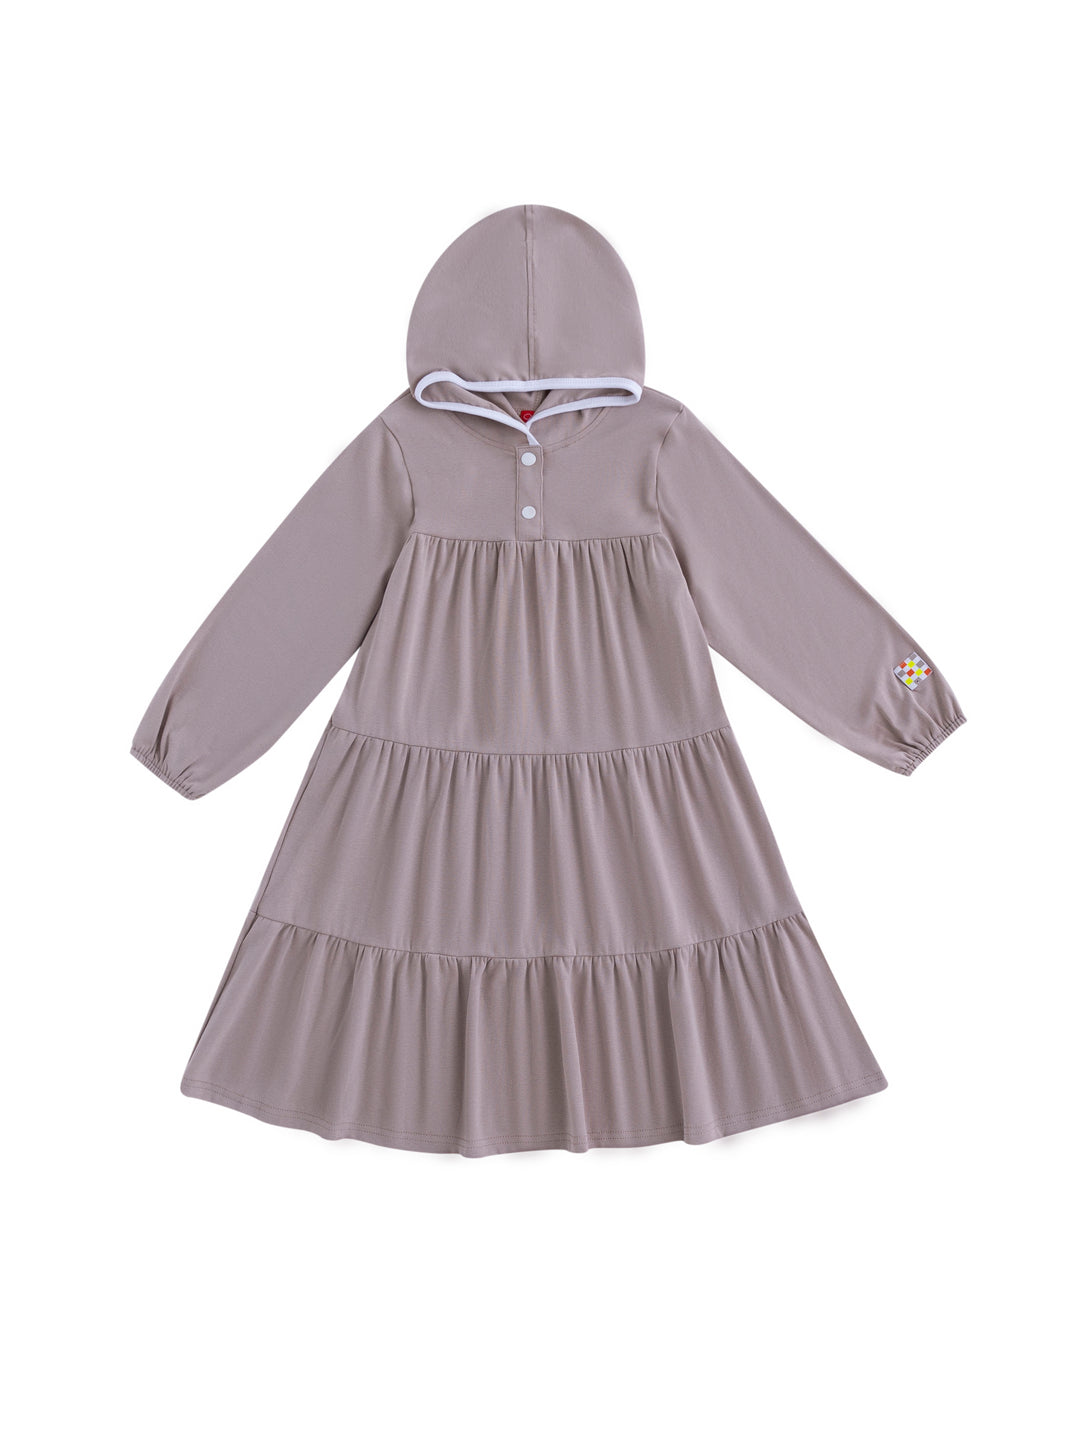 Hooded Contrasting Binding Dress - Beige Combo White